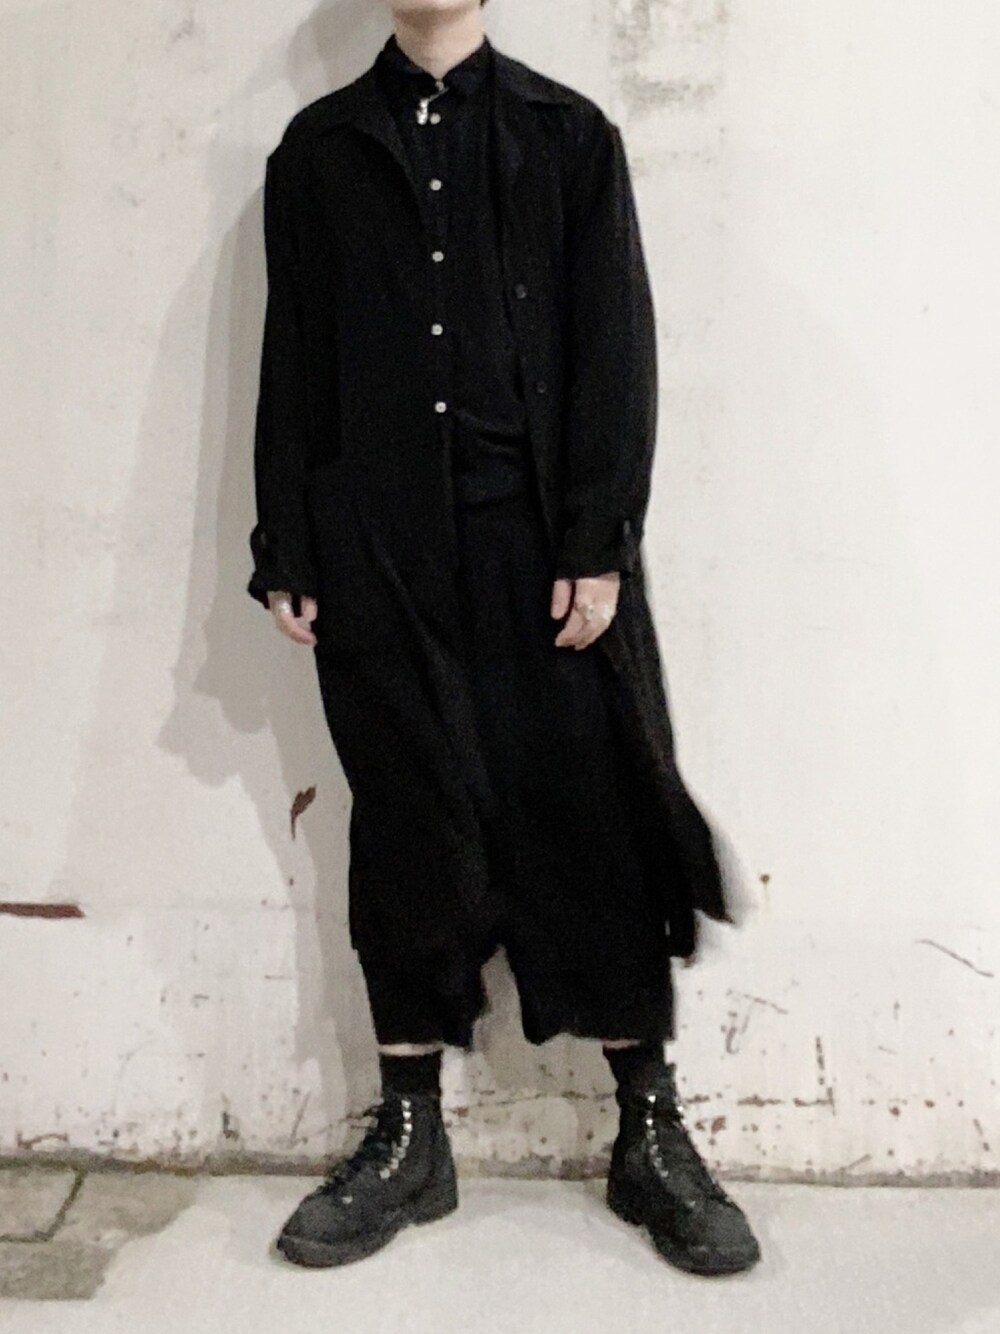 Yohji Yamamoto POUR HOMMEのステンカラーコートを使った人気 